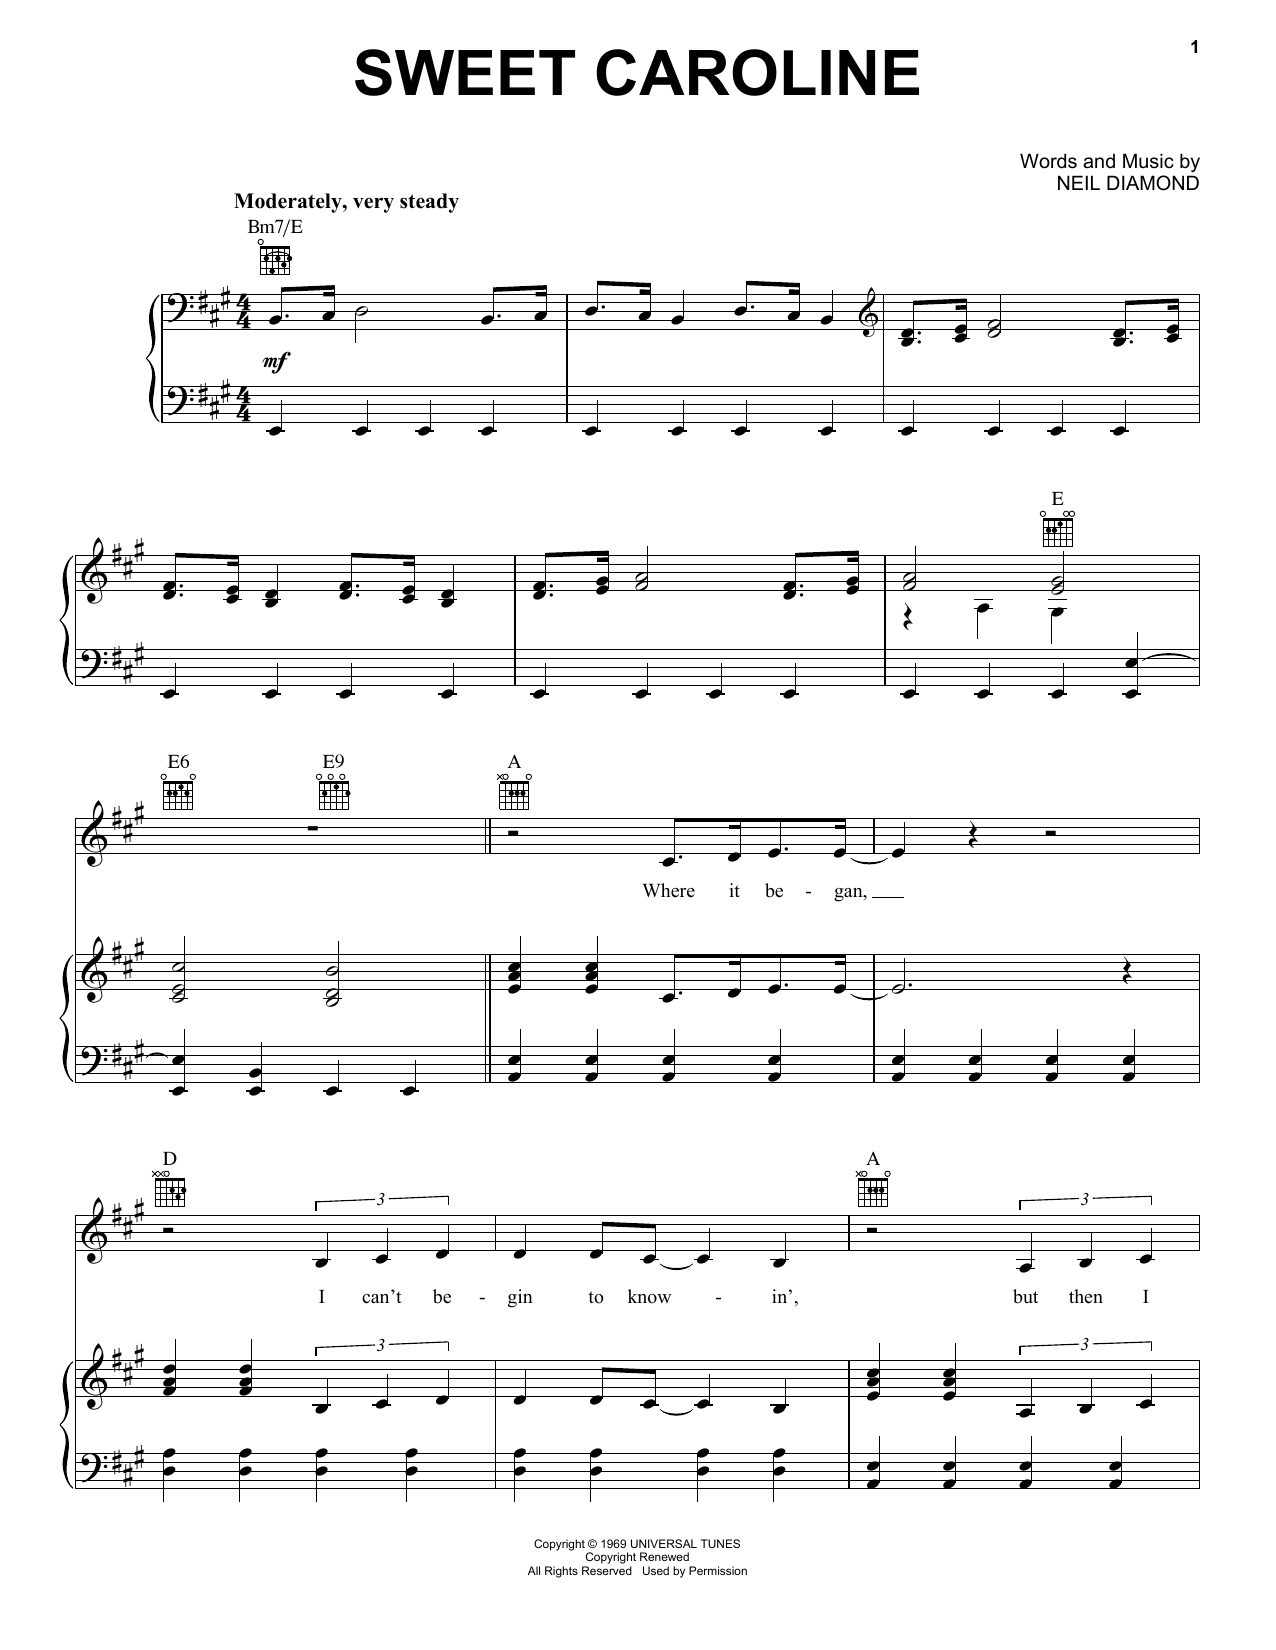 Neil Diamond Sweet Caroline sheet music notes and chords. Download Printable PDF.